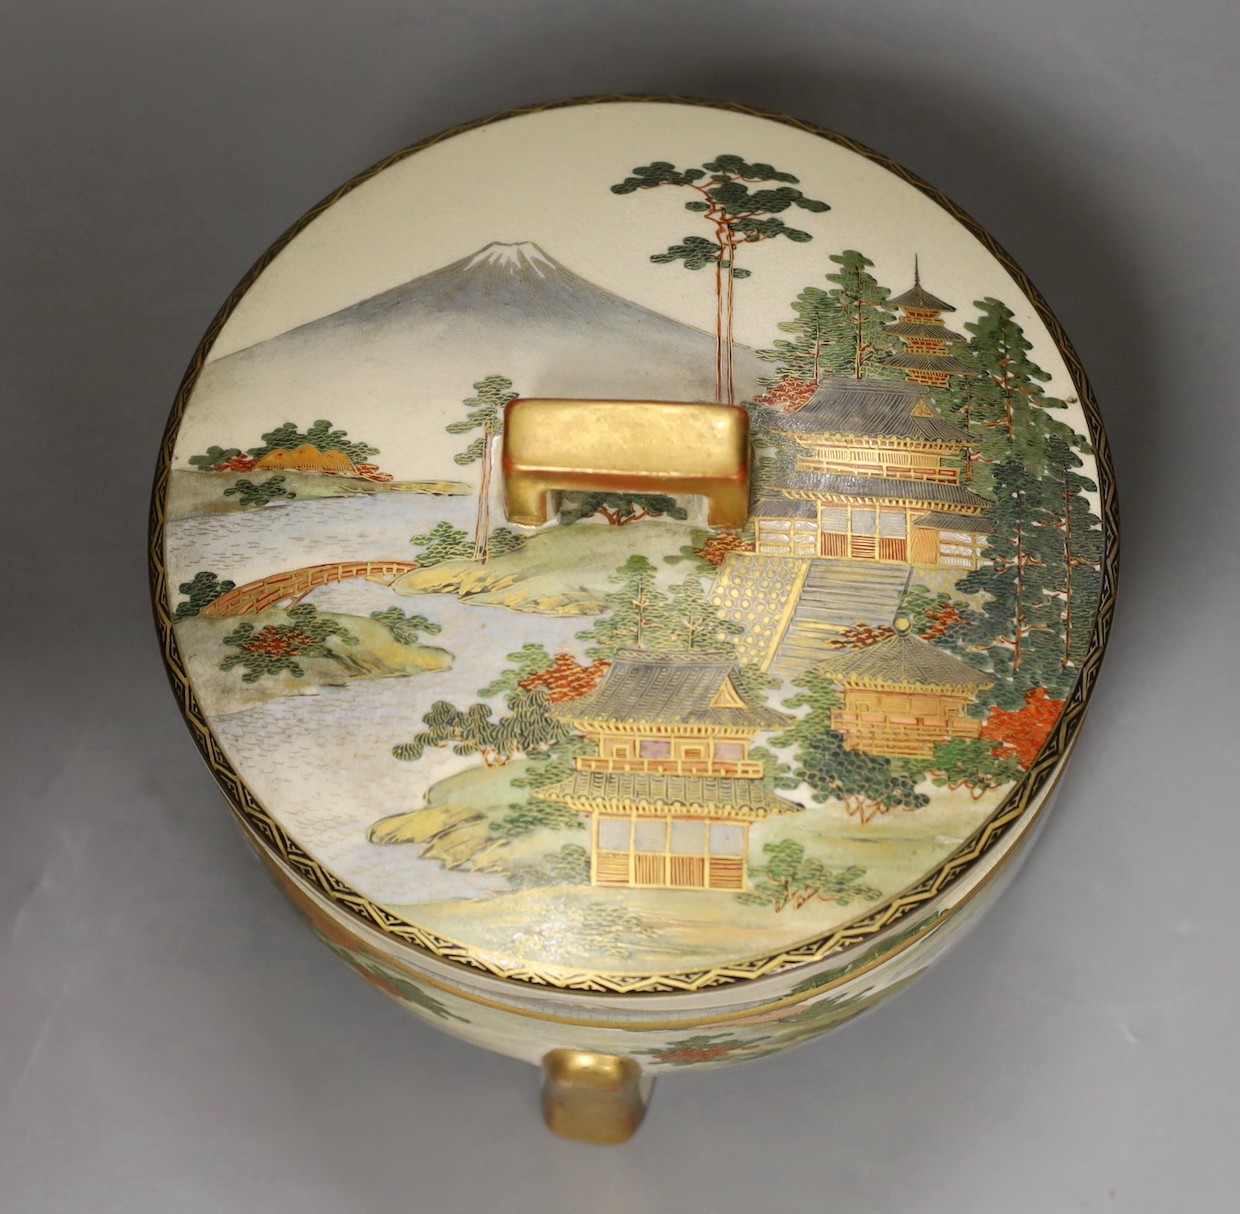 An early 20th century Japanese Satsuma circular box and cover, 18.5cm